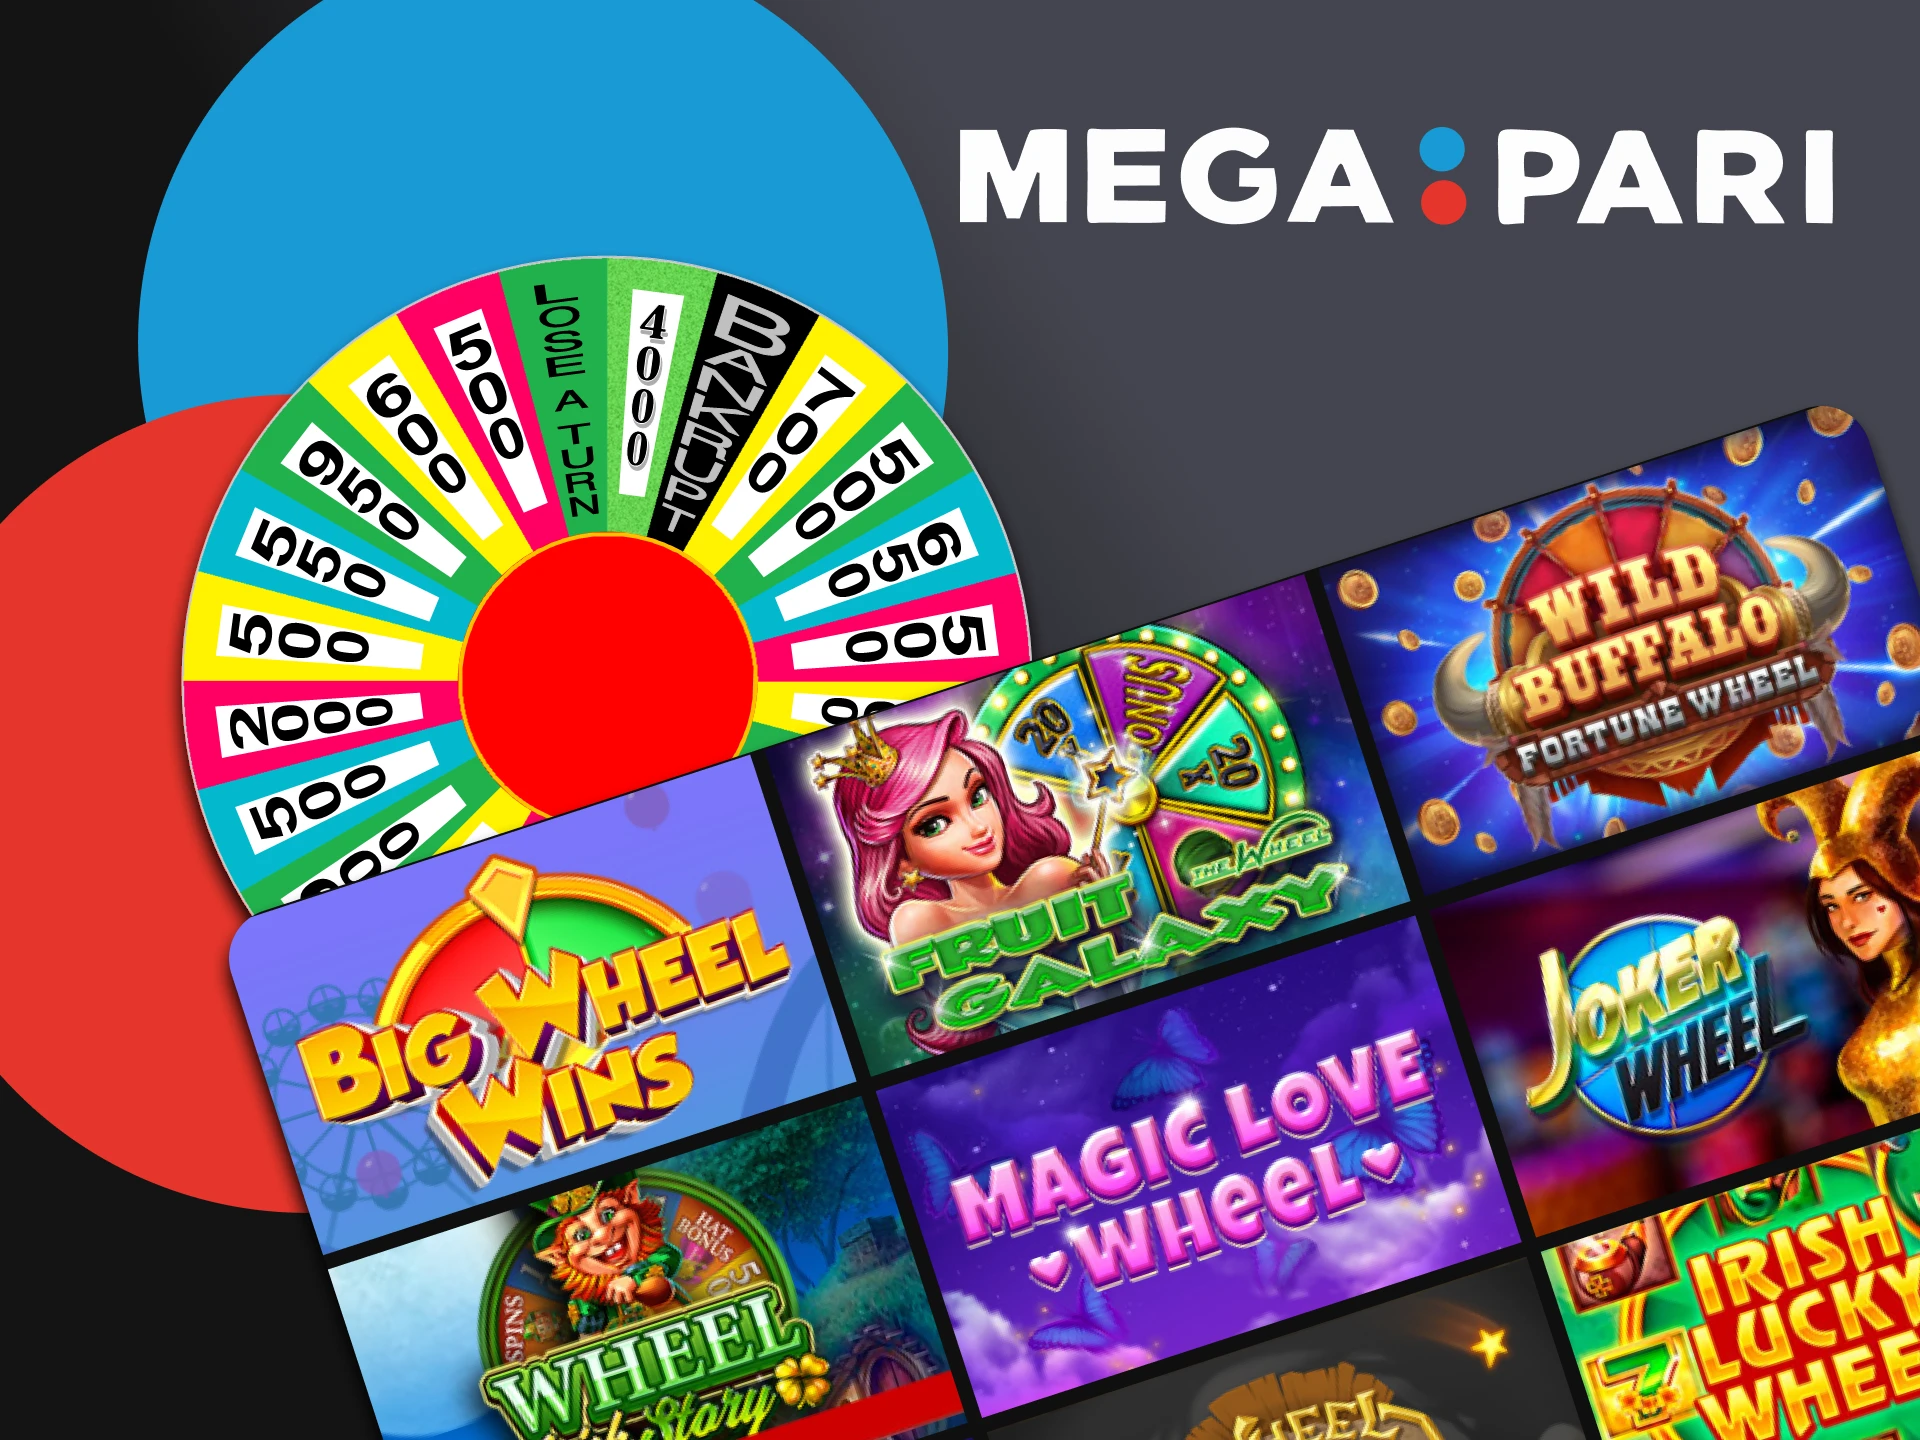 For casino games at Megapari, choose Wheel of Fortune.